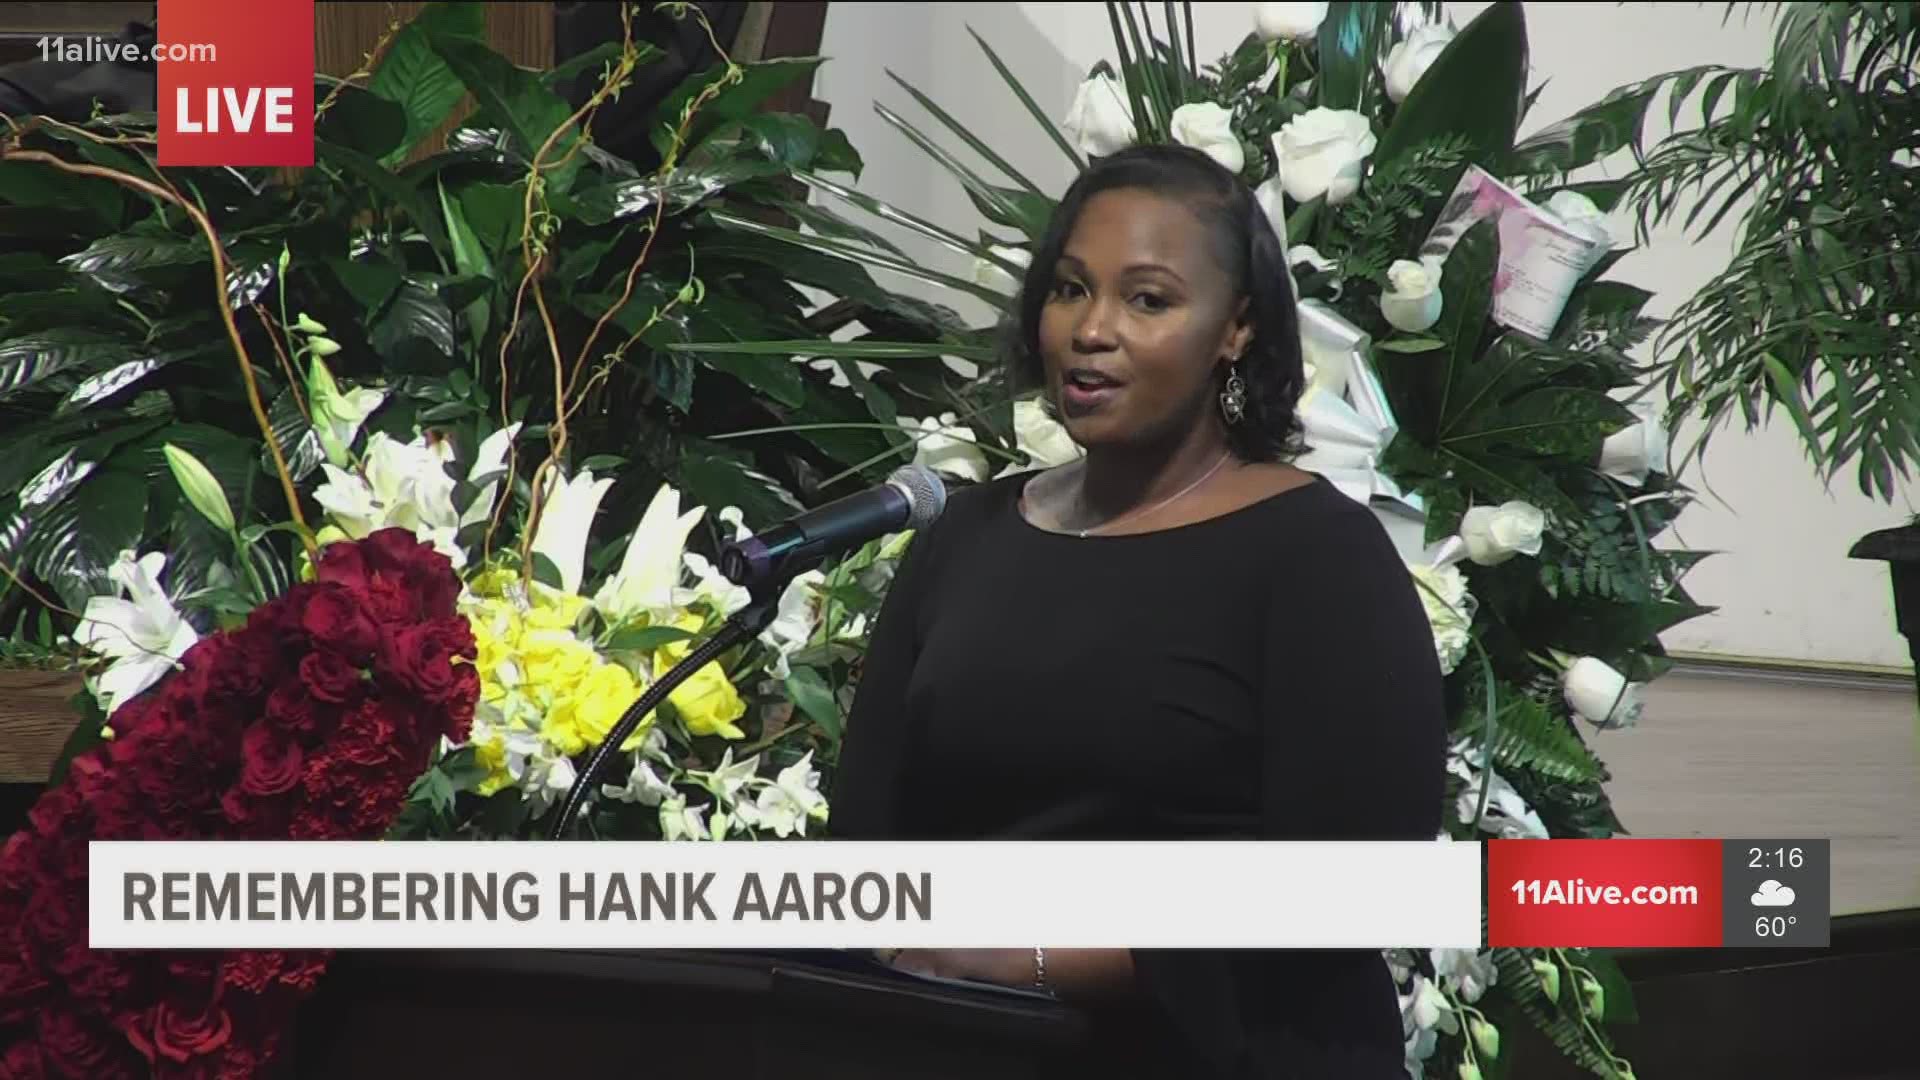 Allan Tanenbaum, Attorney, Secretary of Hank Aaron Chasing the Dream Foundation speaks at funeral for Henry Louis Aaron at Friendship Baptist Church in Atlanta.